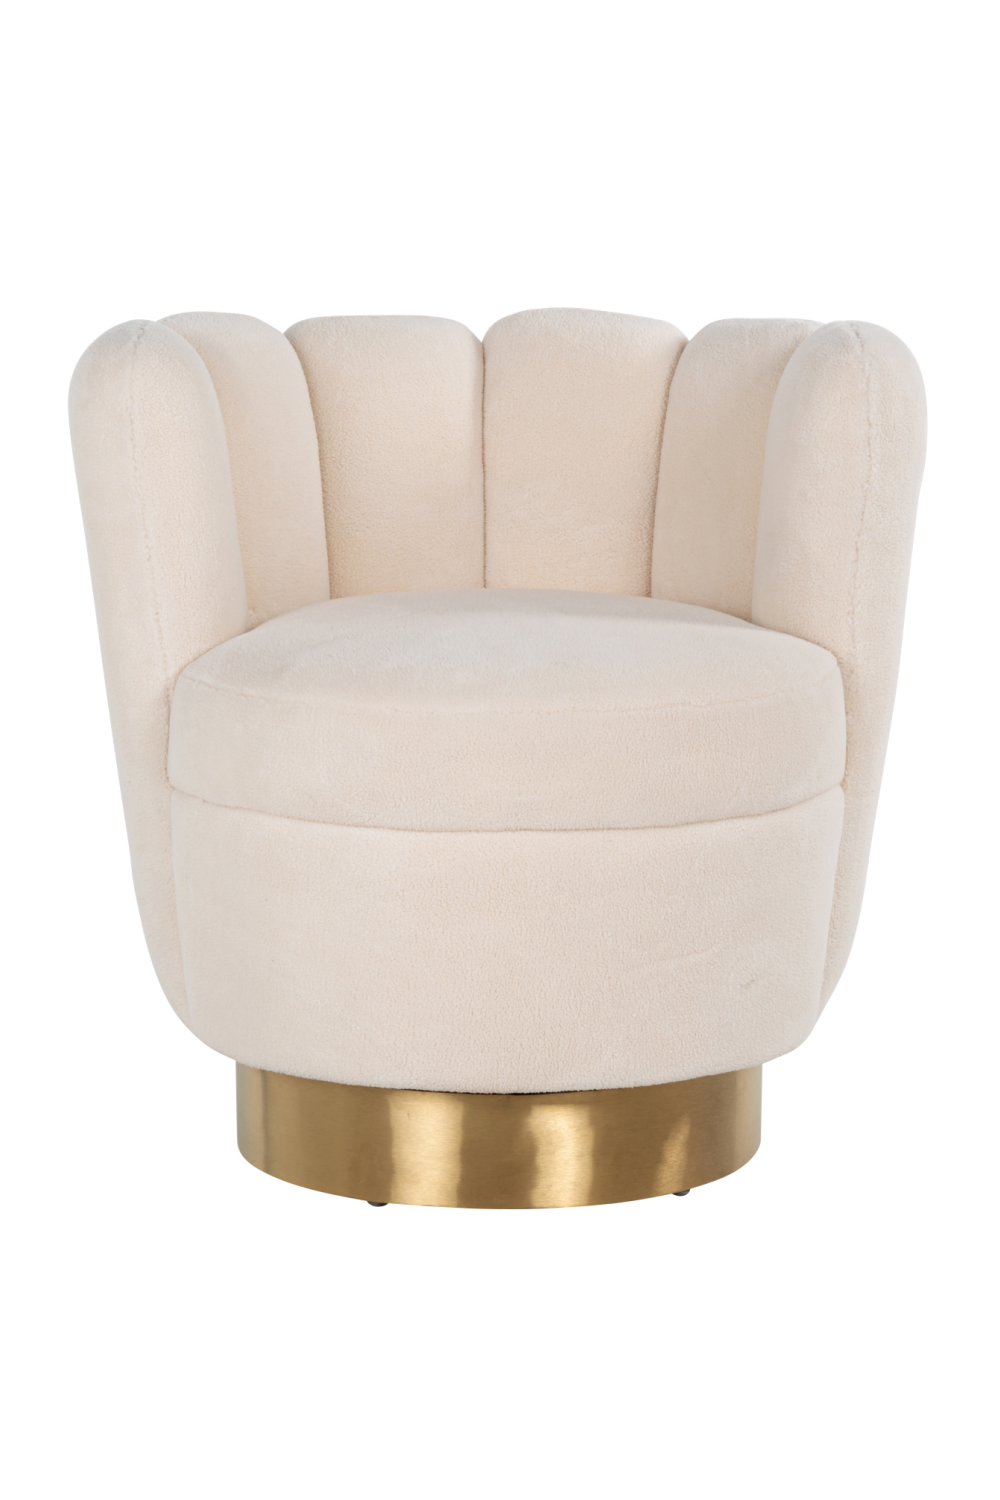 Round White Easy Chair | OROA Mayfair | Oroa.com